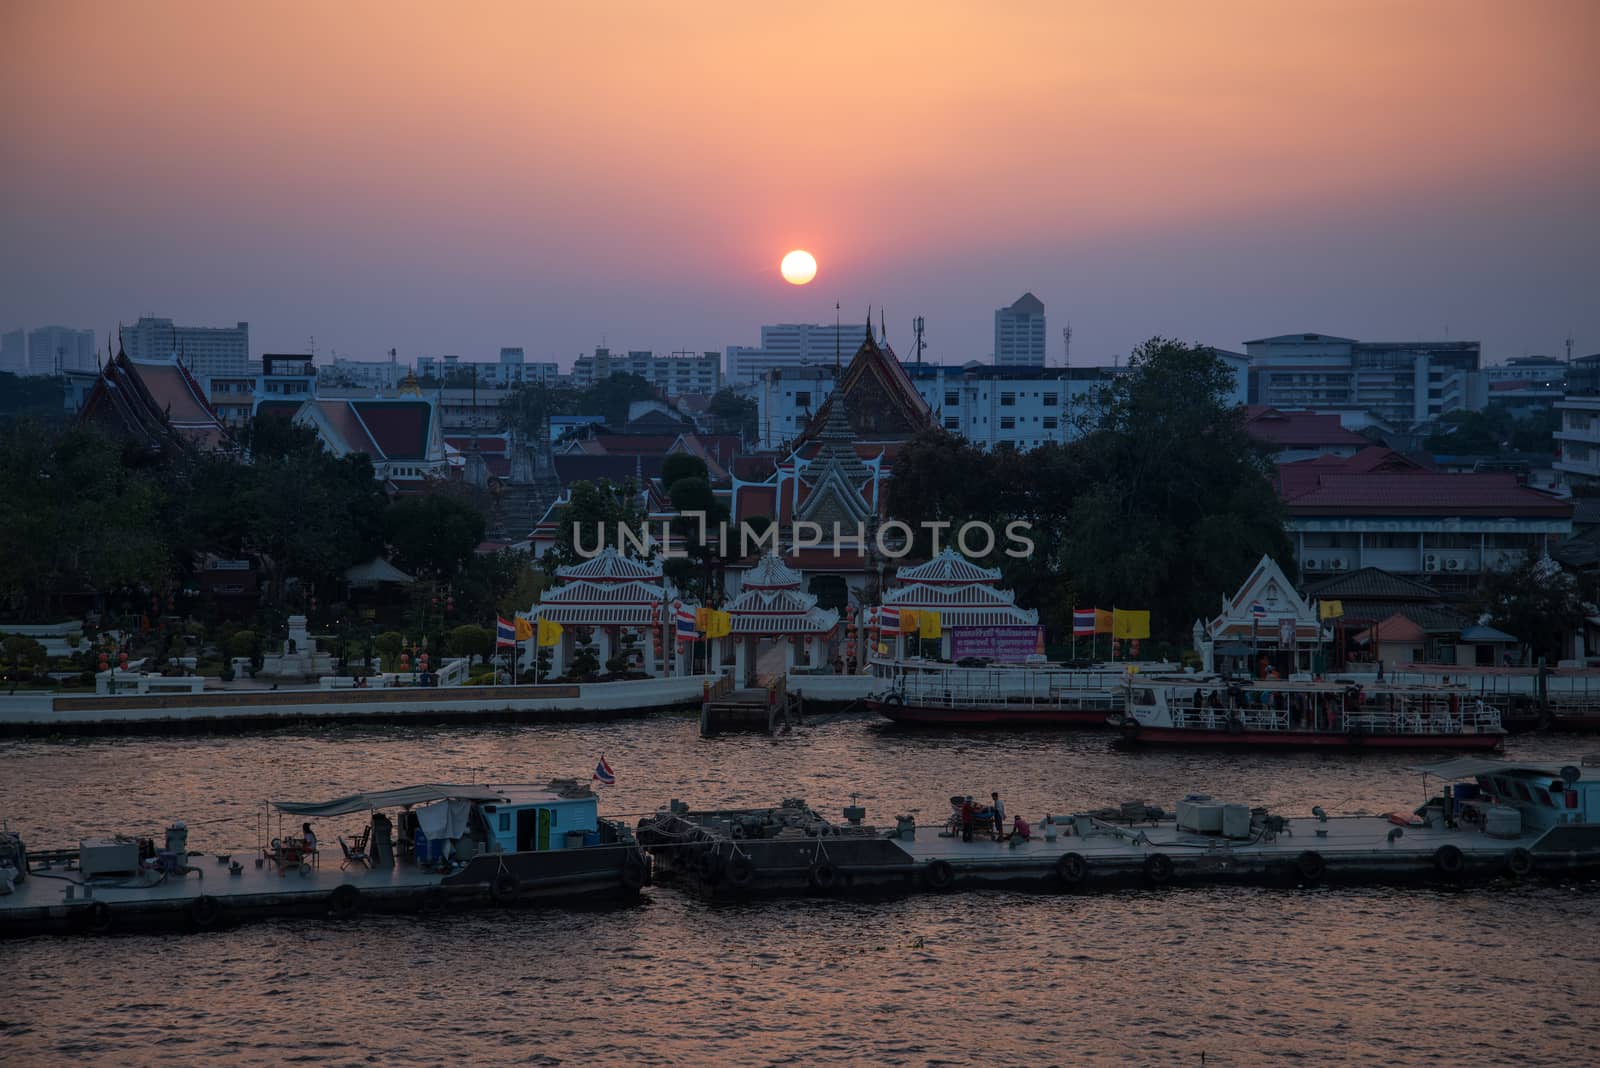 View of the Chao Phraya River in Bangkok, Thailand